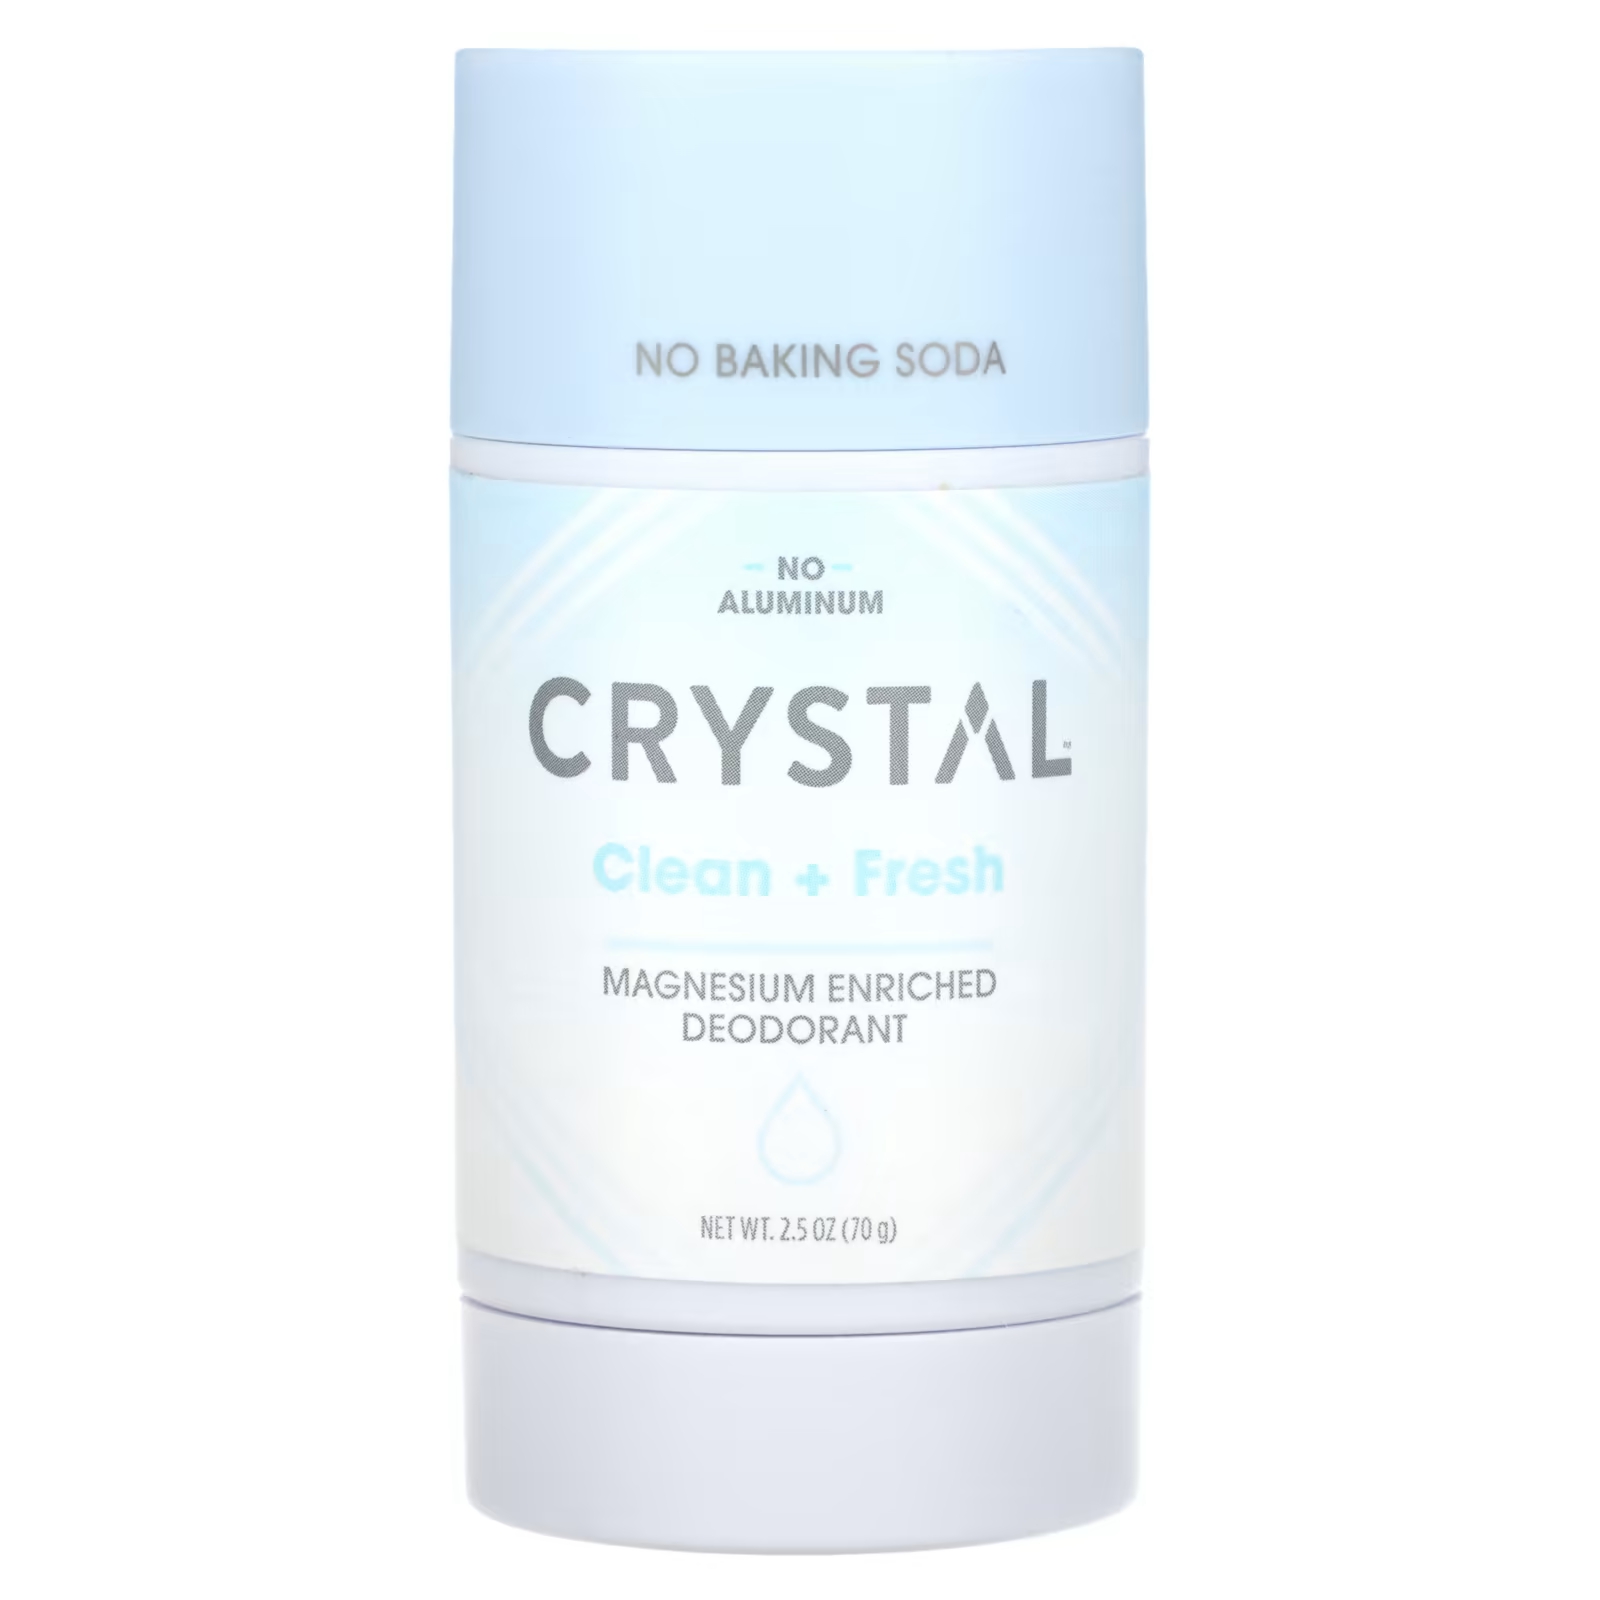 Дезодорант Crystal Clean + Fresh обогащенный магнием, 70 г crystal обогащенный магнием дезодорант clean fresh 70 г 2 5 унции